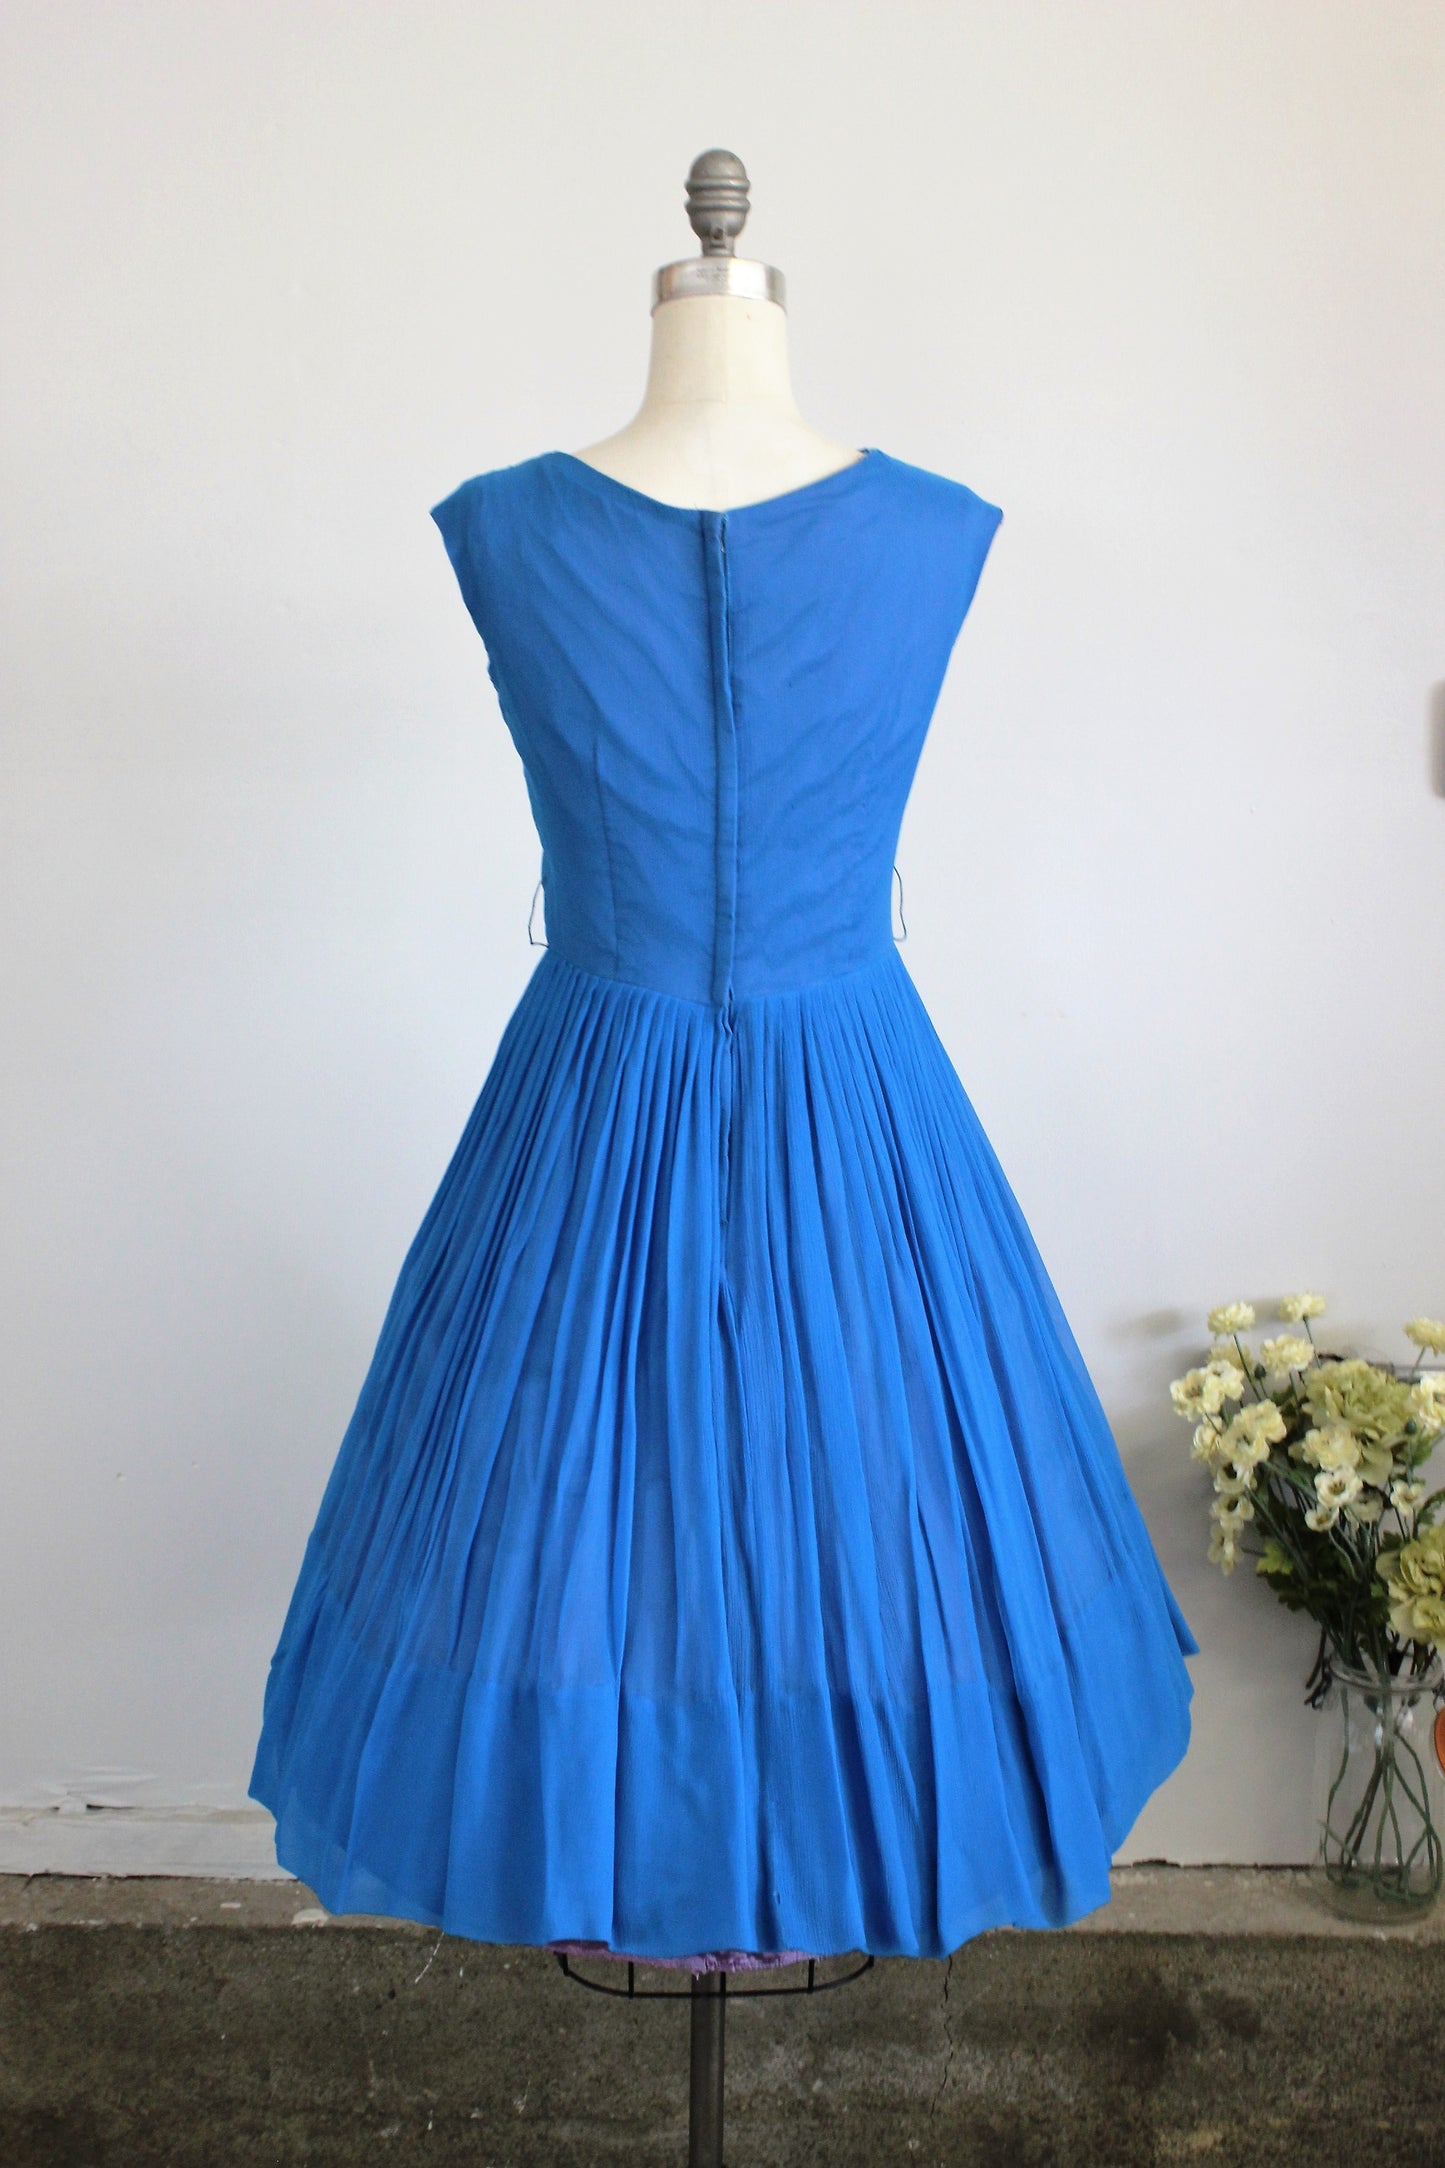 Vintage 1960s Dress in Blue Chiffon by Elinor Gay – Toadstool Farm Vintage